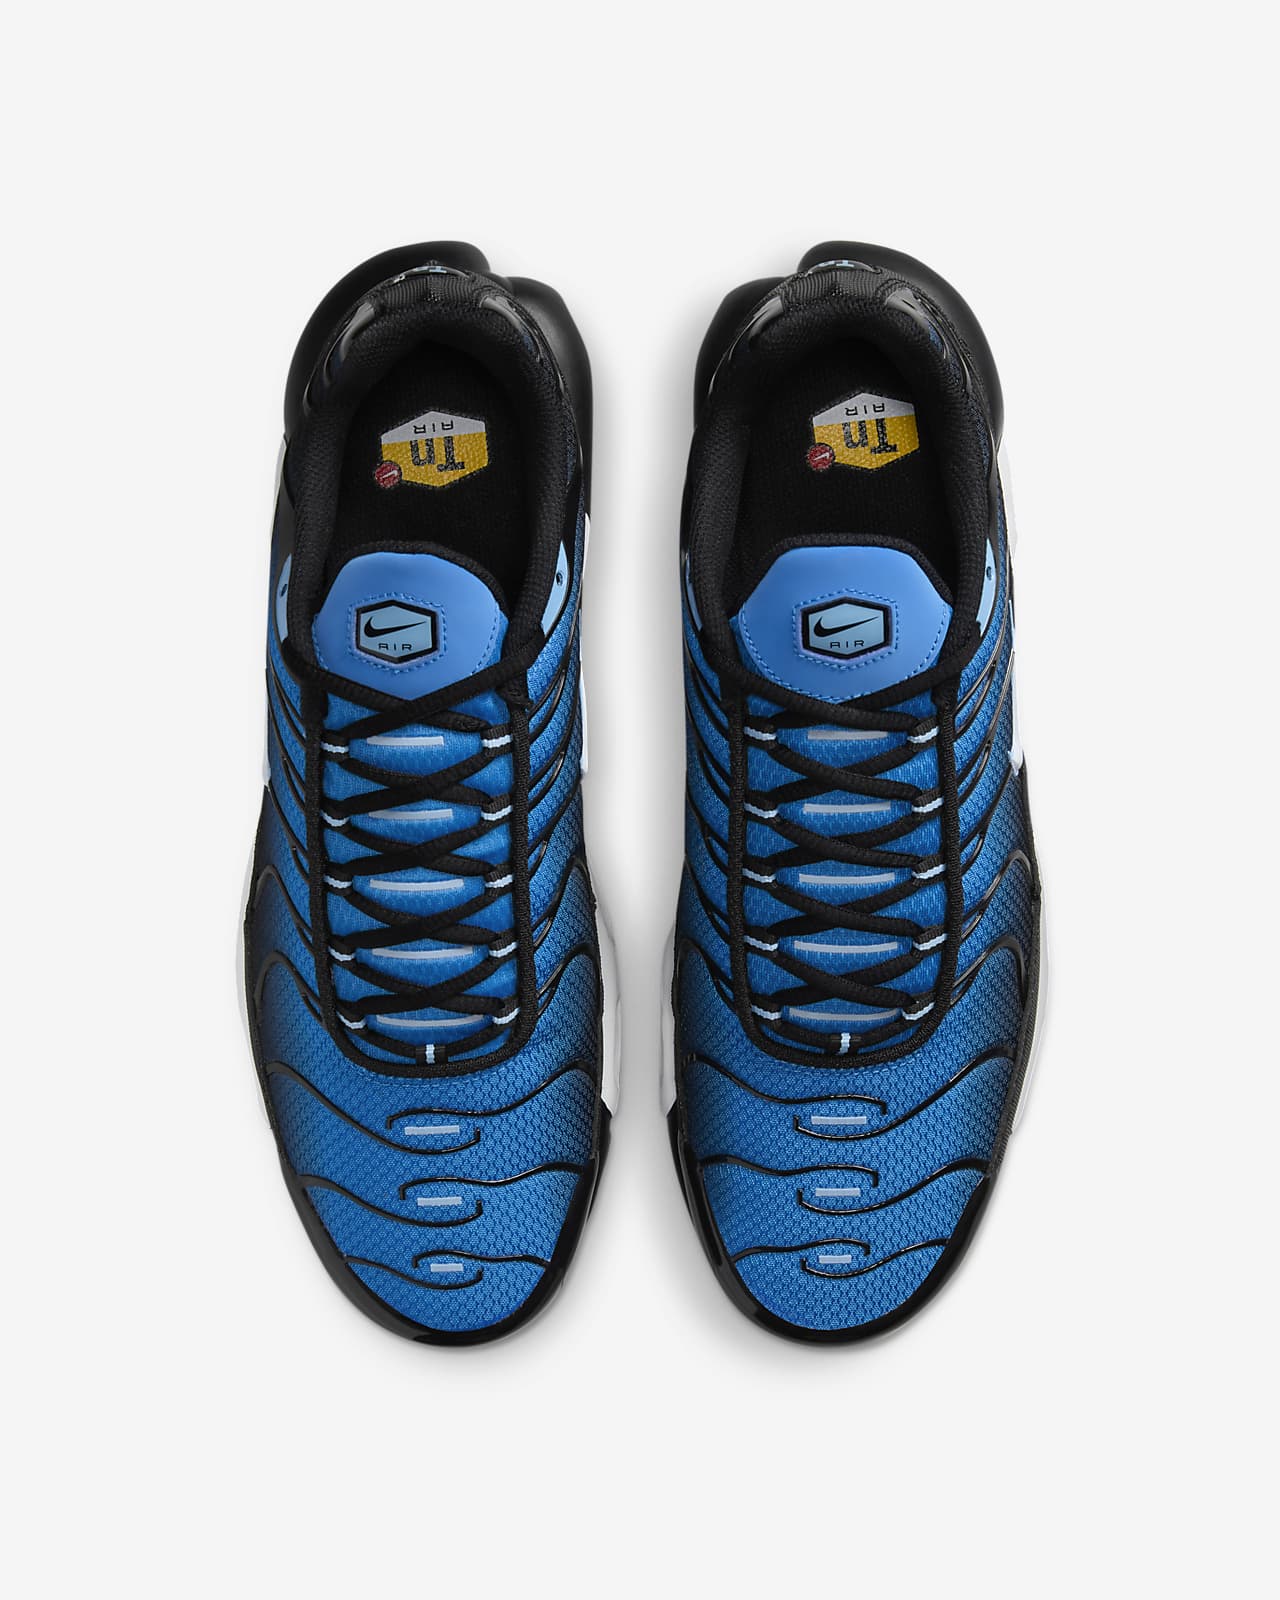 Shoes Nike Air Max Plus for Men - DM0032